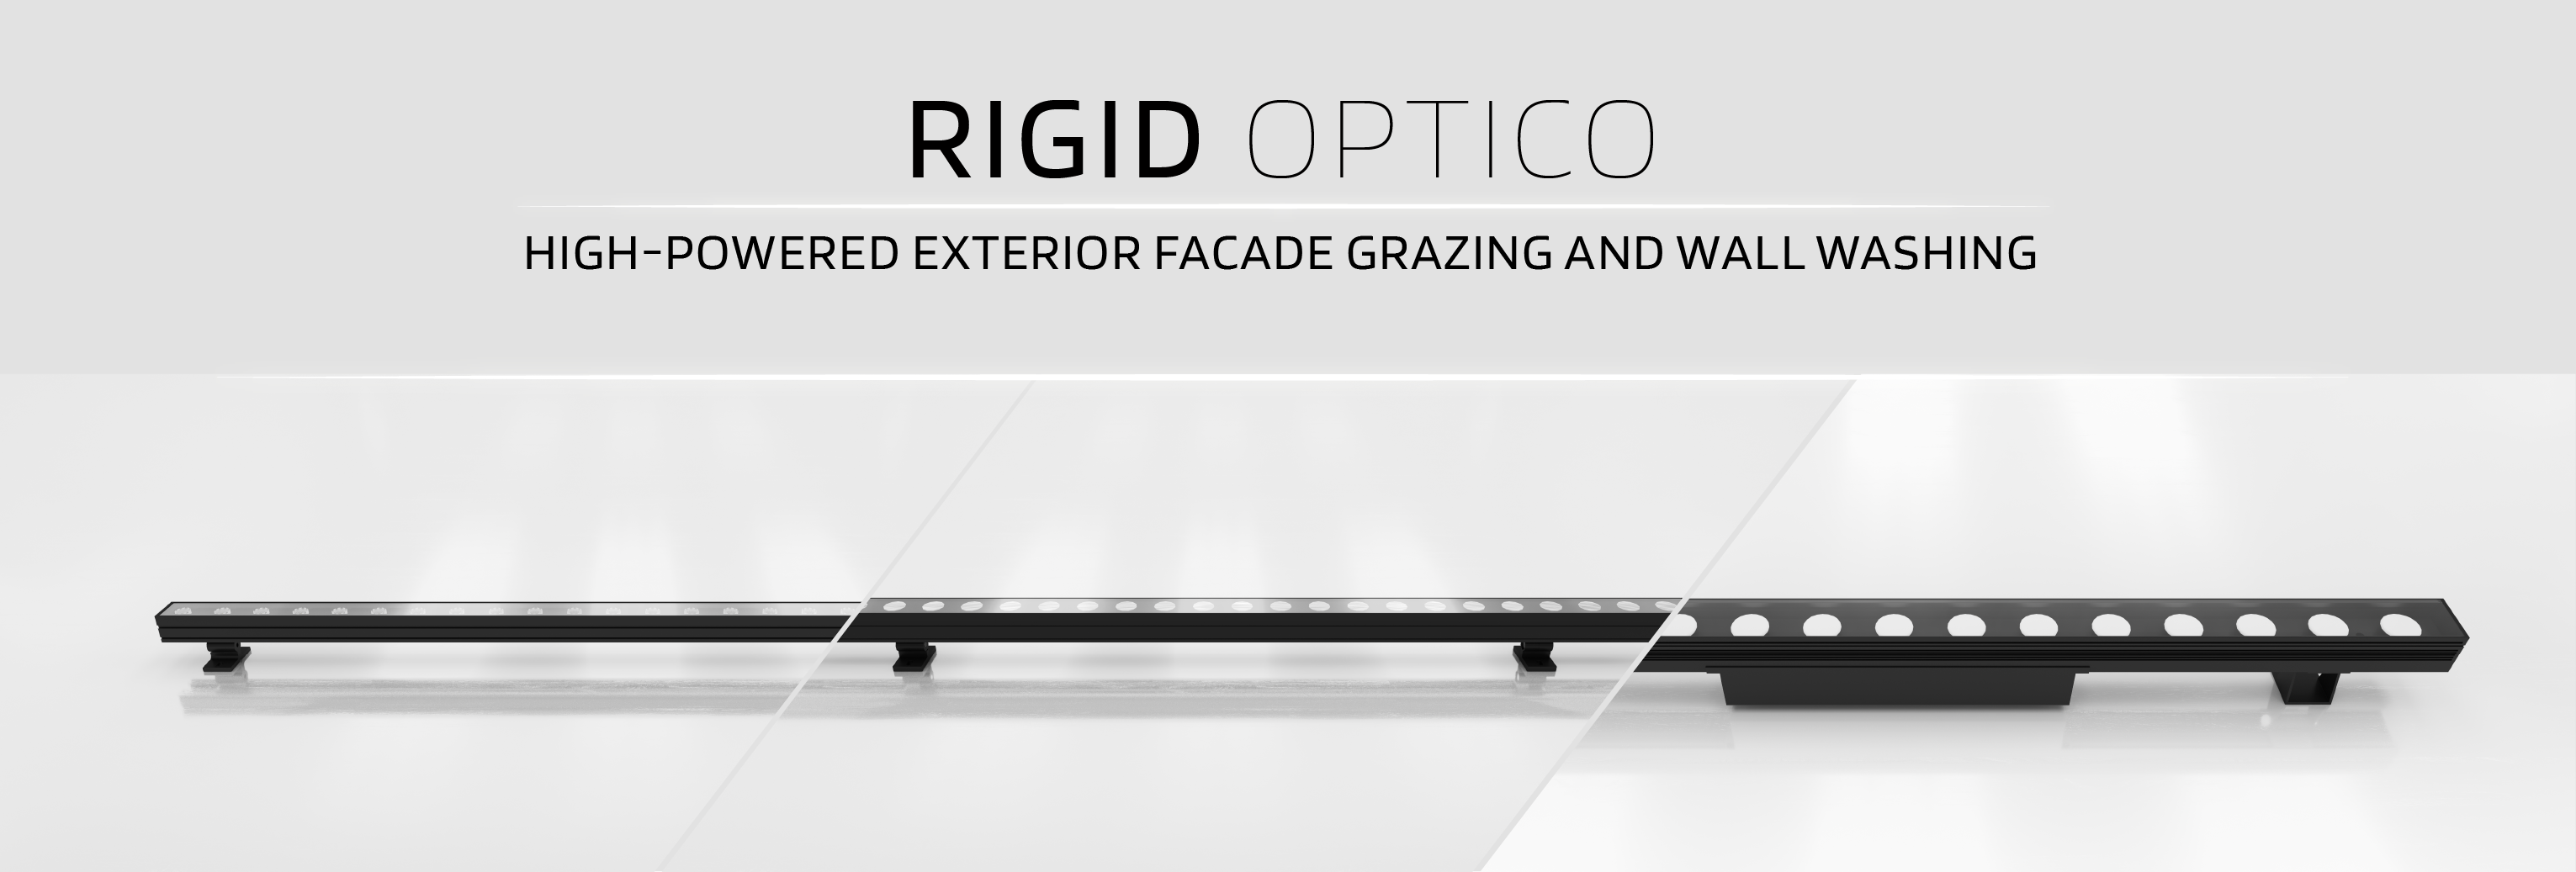 The Rigid Optico Range 